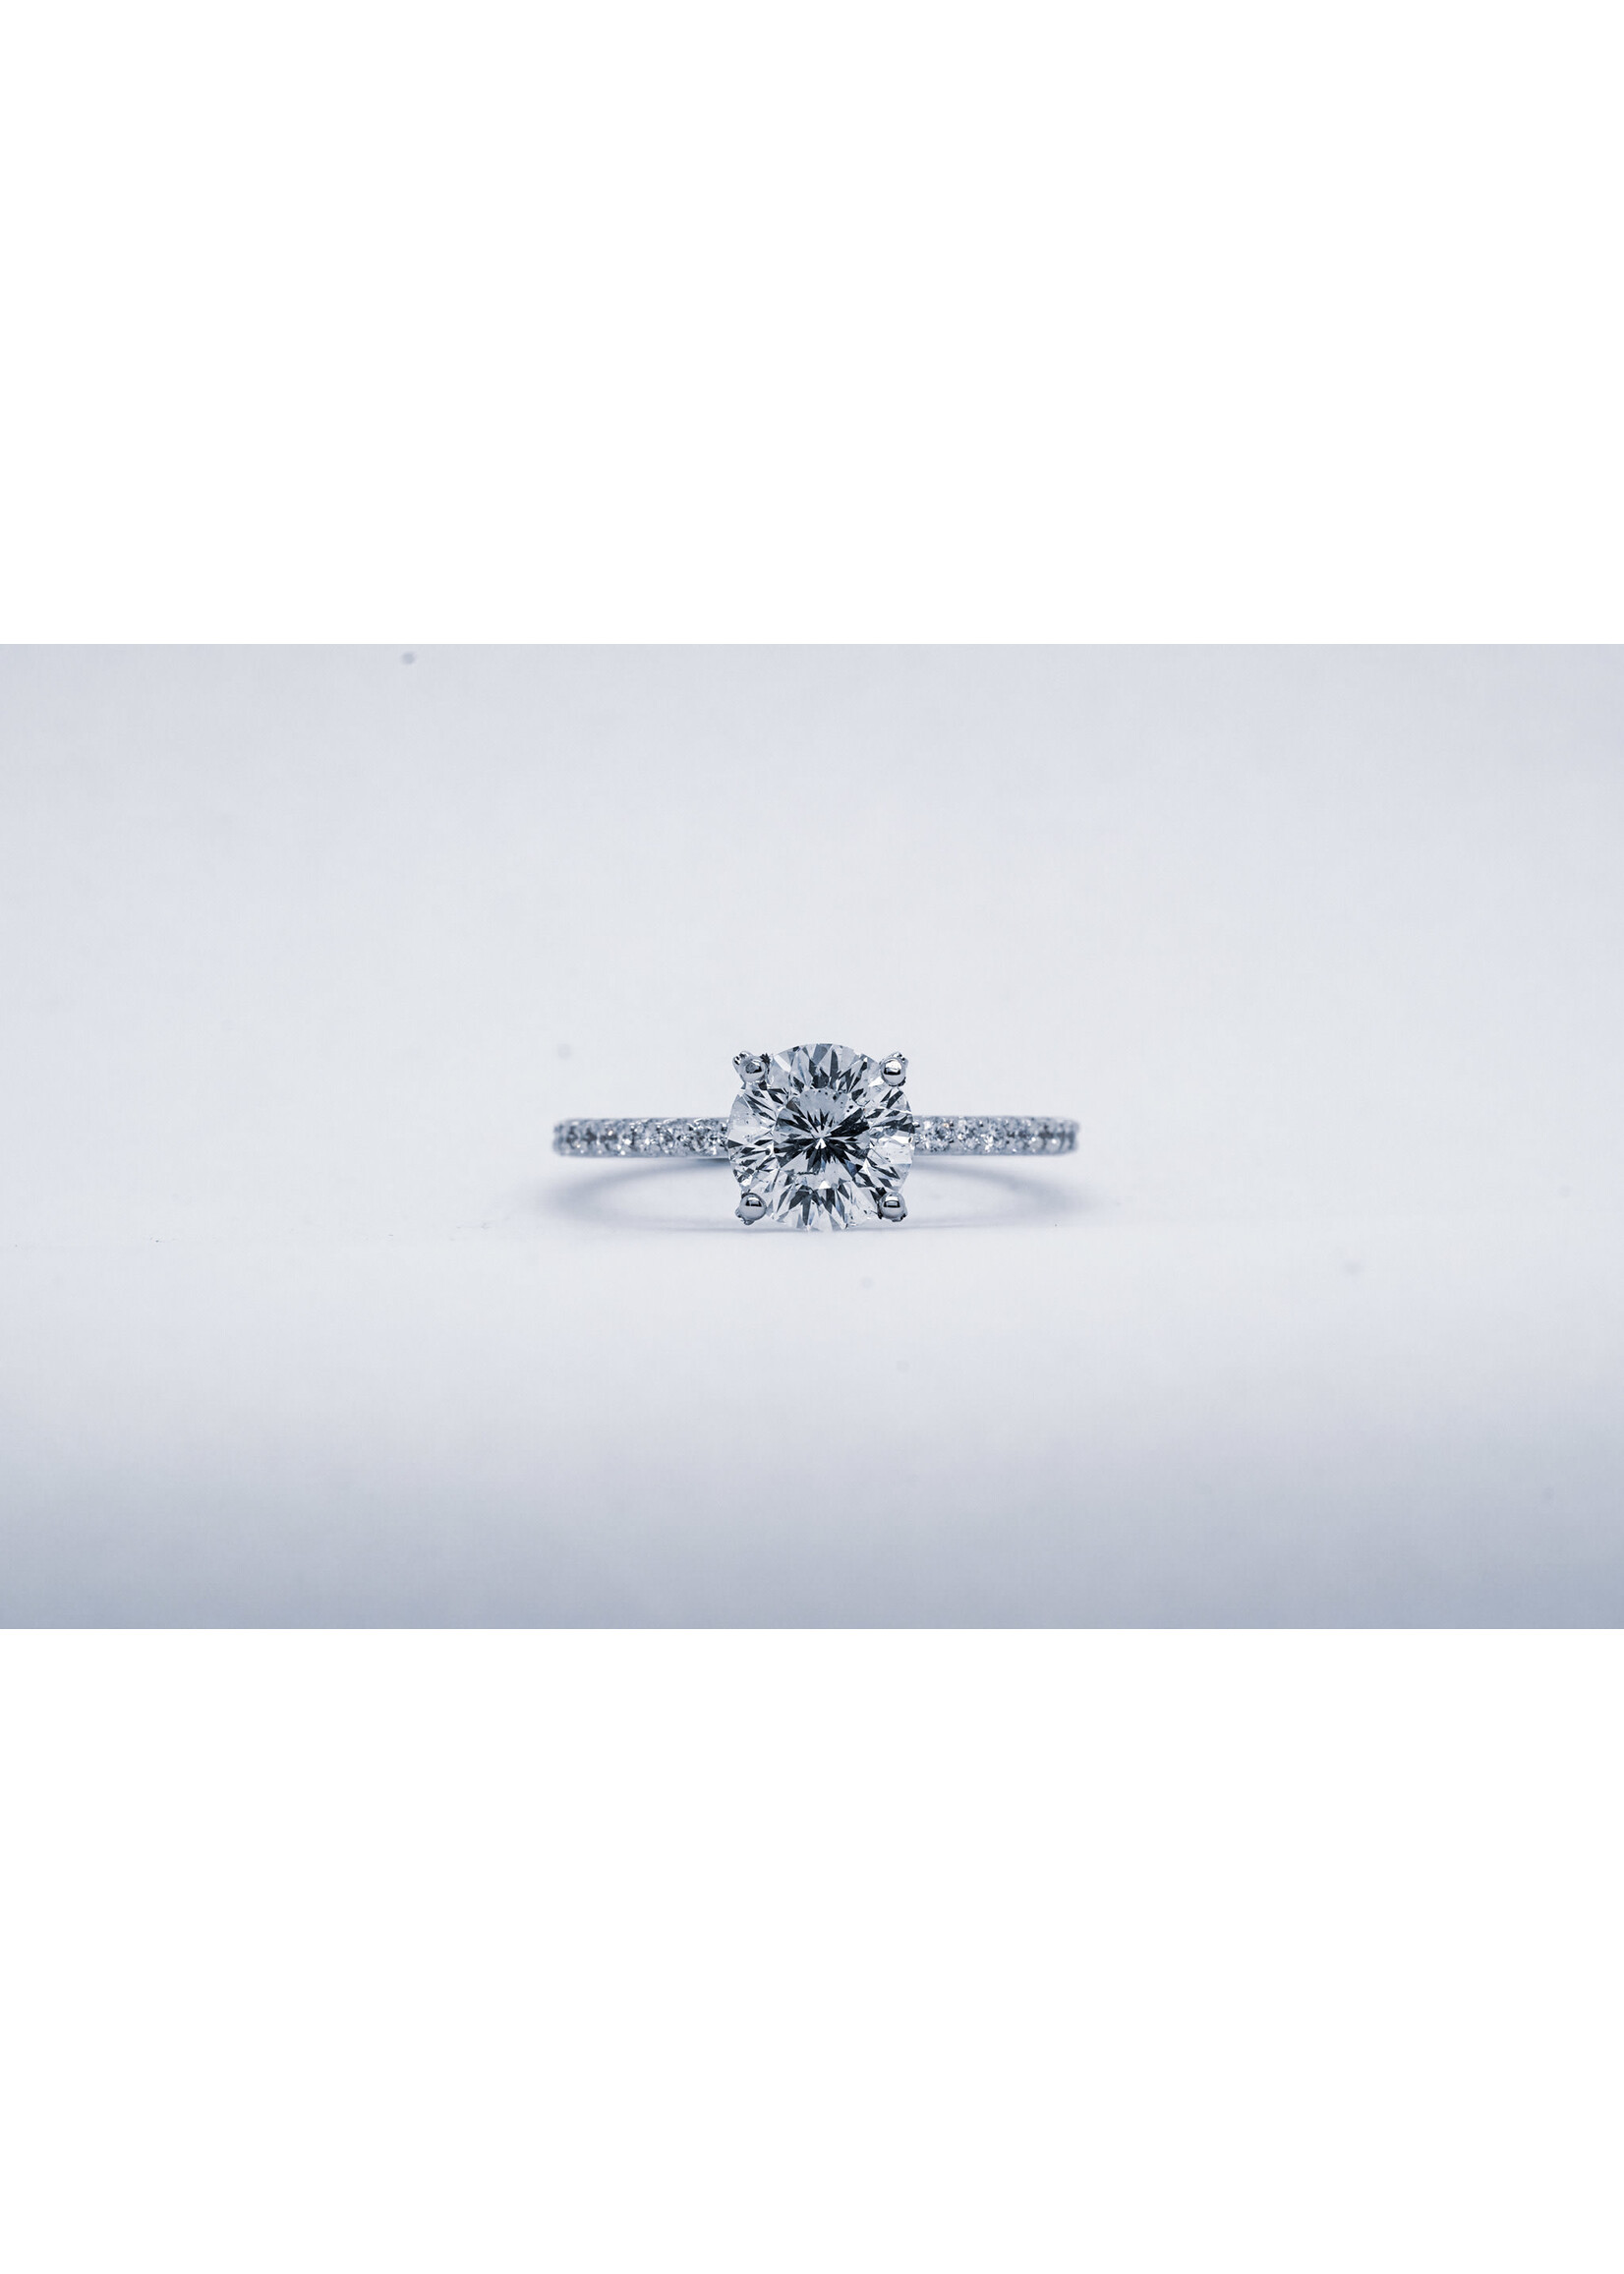 14KW 2.09g 1.81ctw (1.45ctr) G/SI2 Celebration Cut Diamond Engagement Ring (size 7)